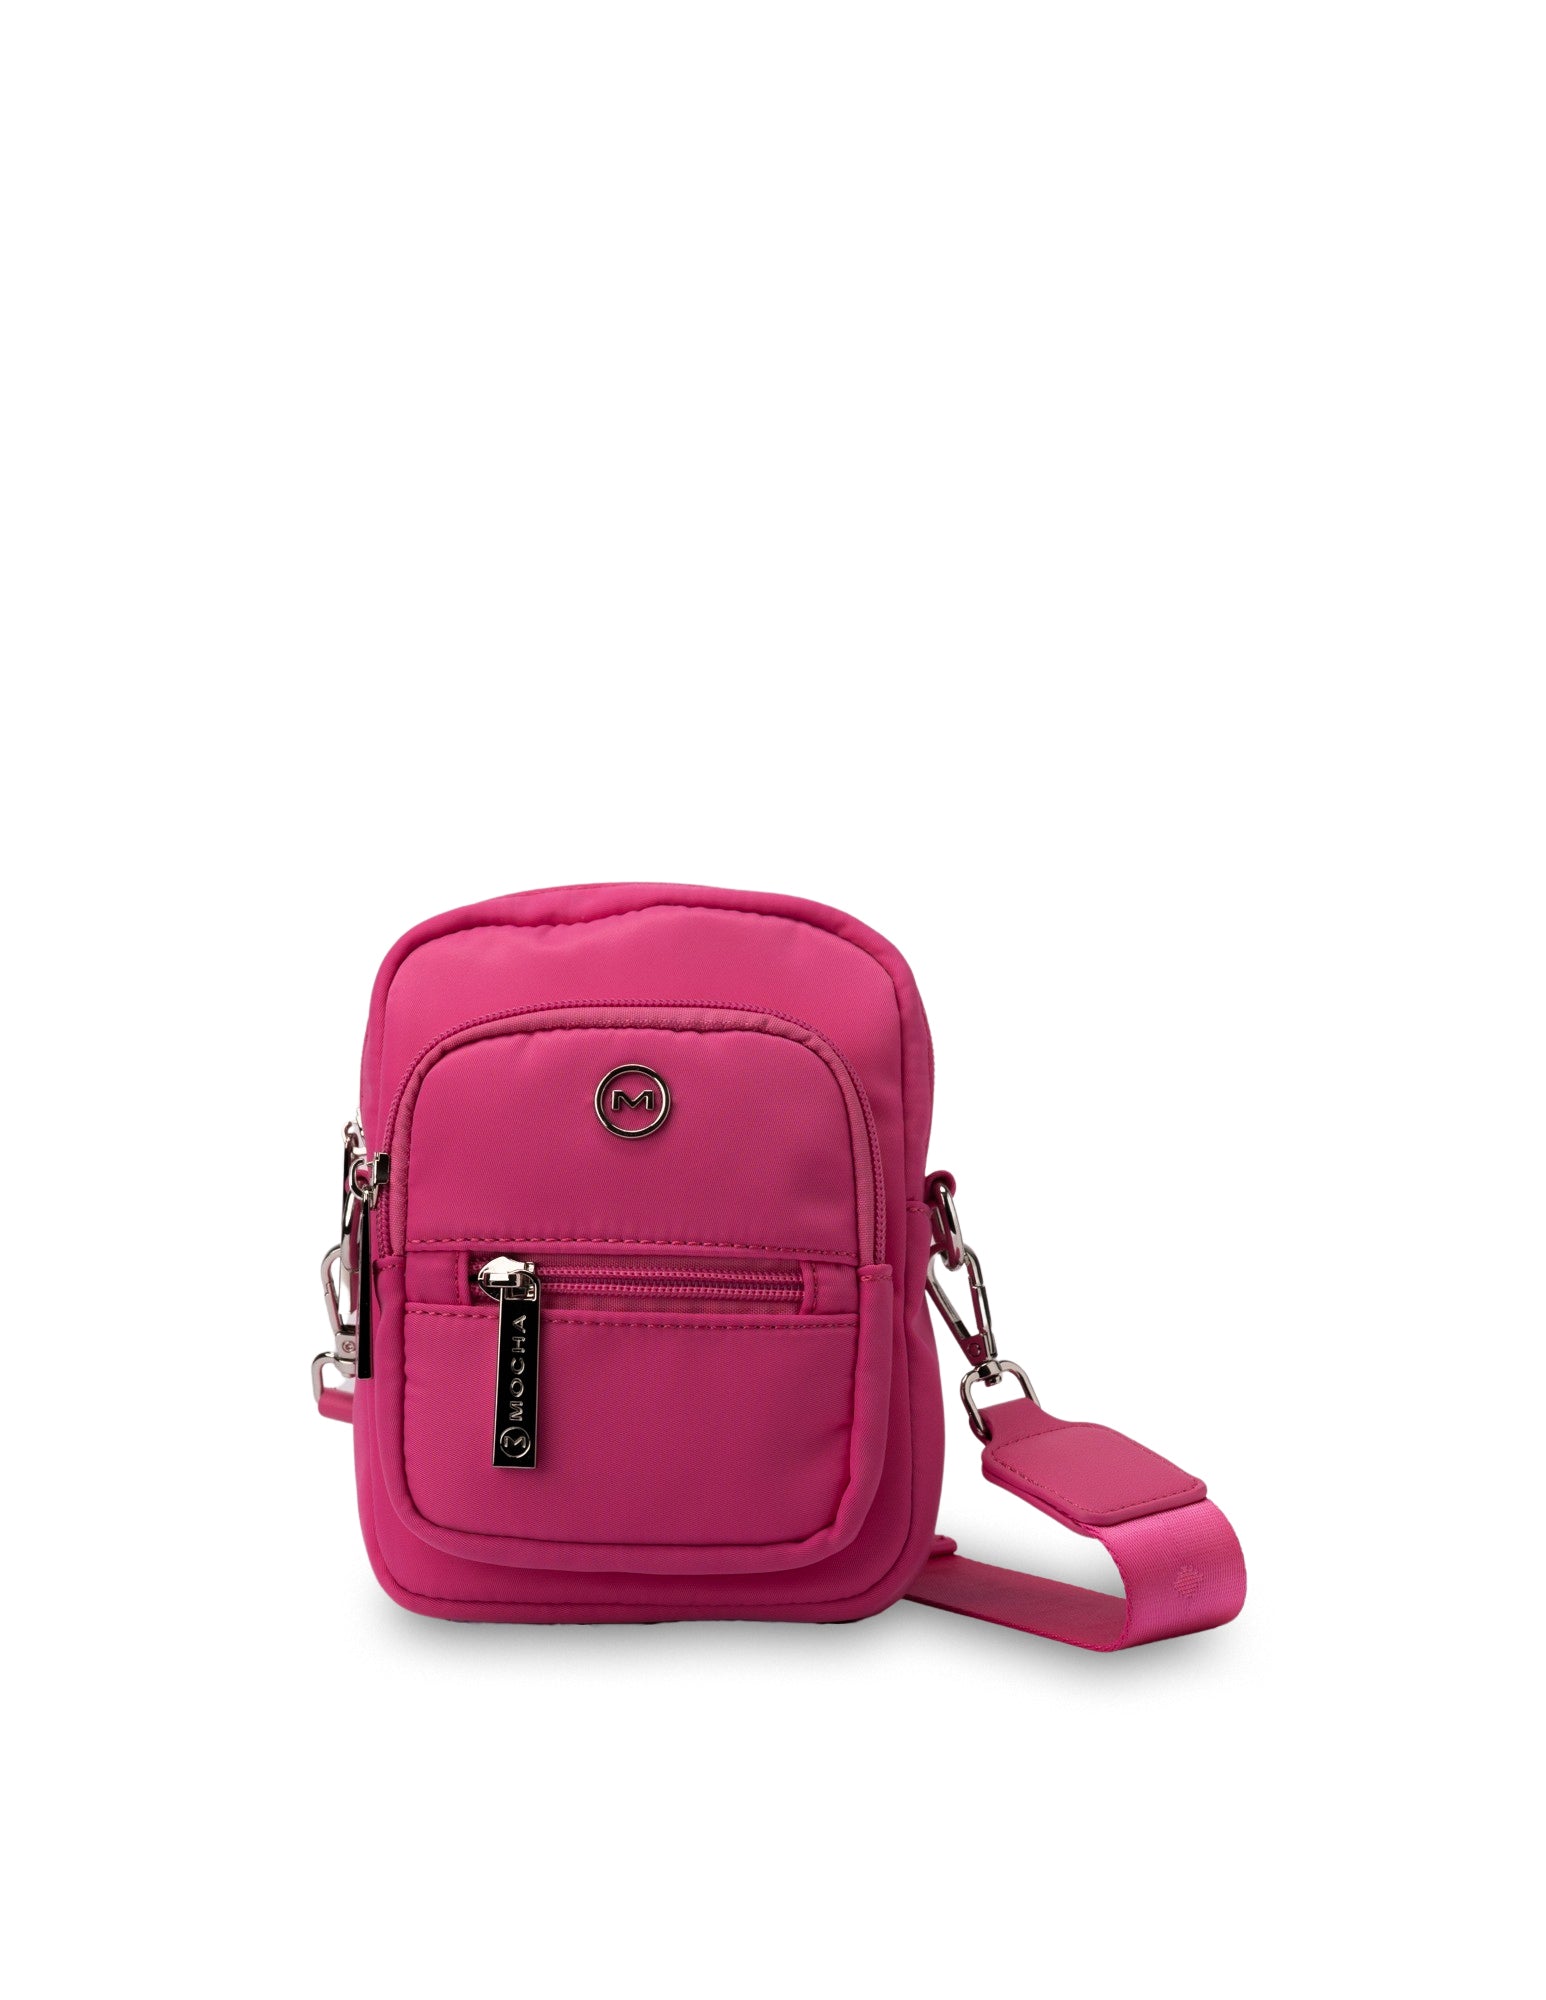 Nicky Nylon Crossbody Camera Bag - Pink